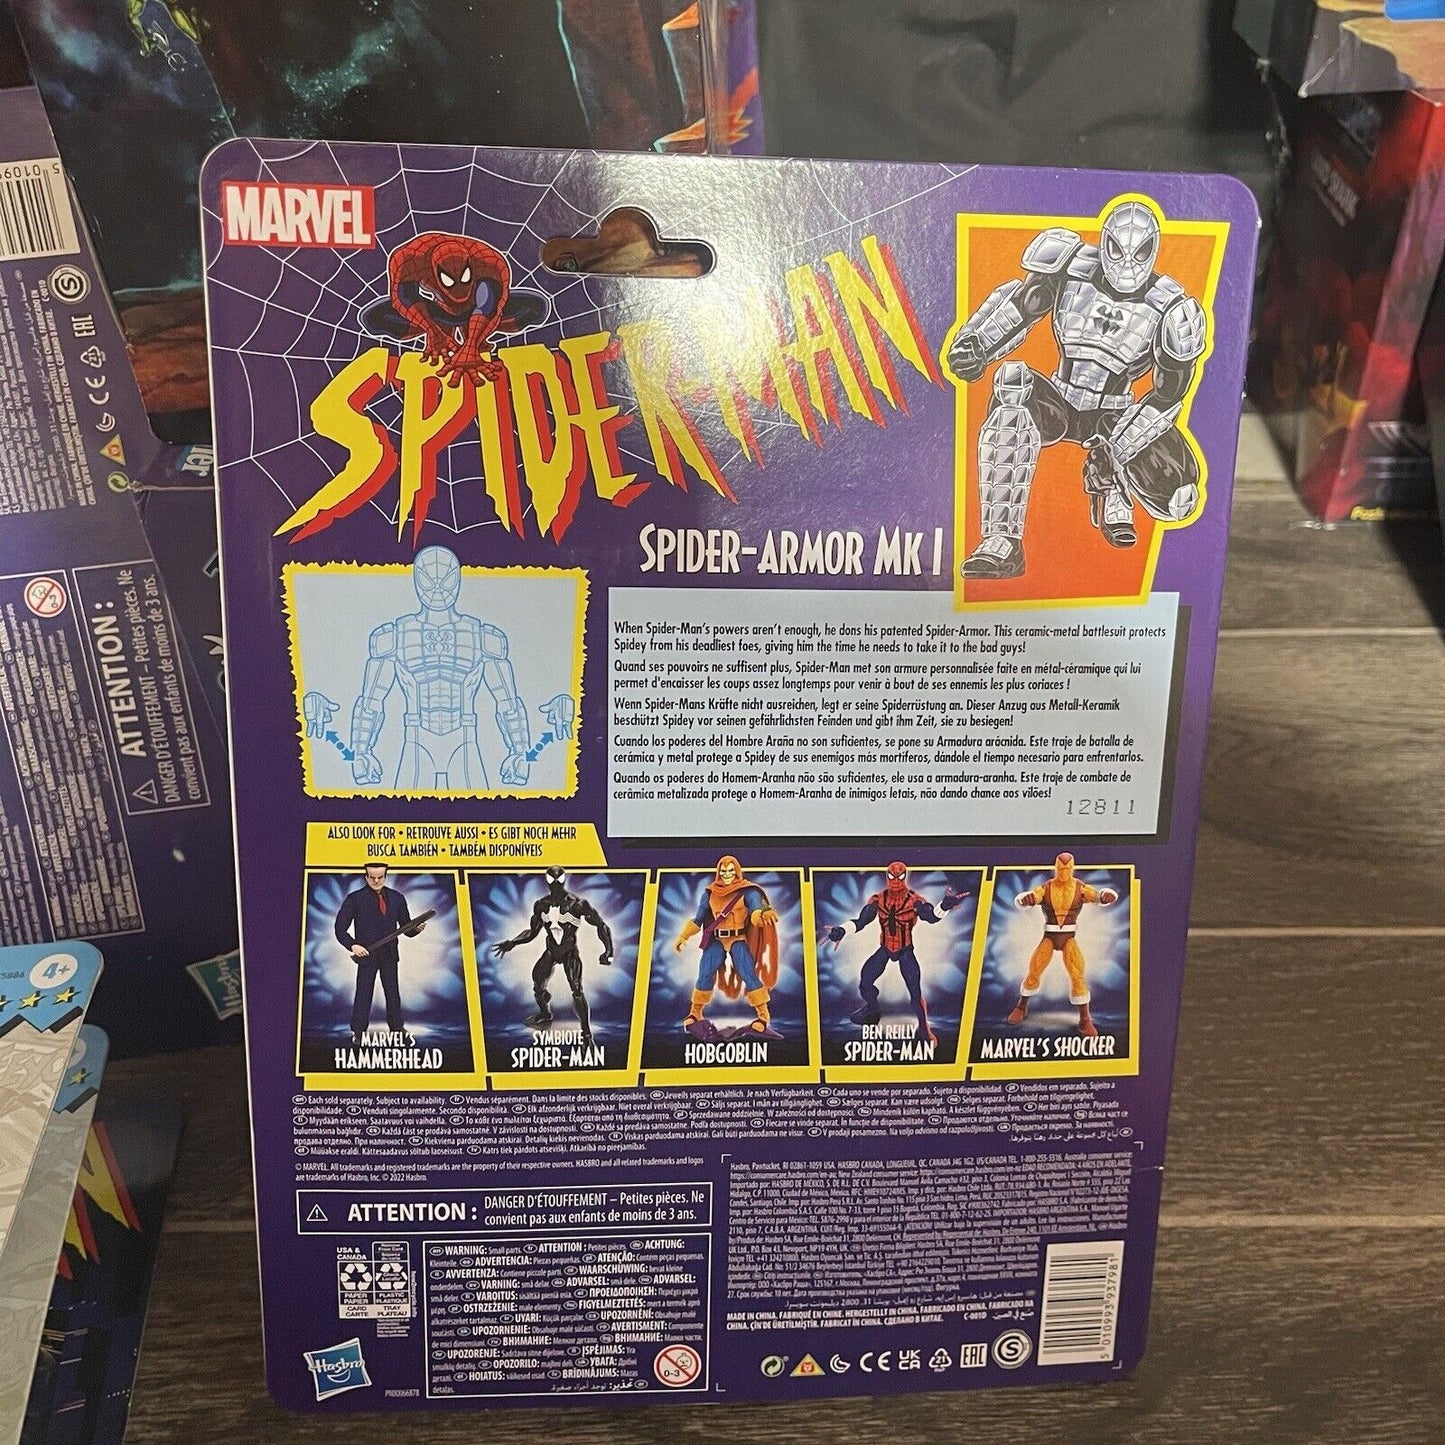 Marvel Legends Hasbro Retro Classic Spider-man SPIDER-ARMOR MK1 6" Figure New